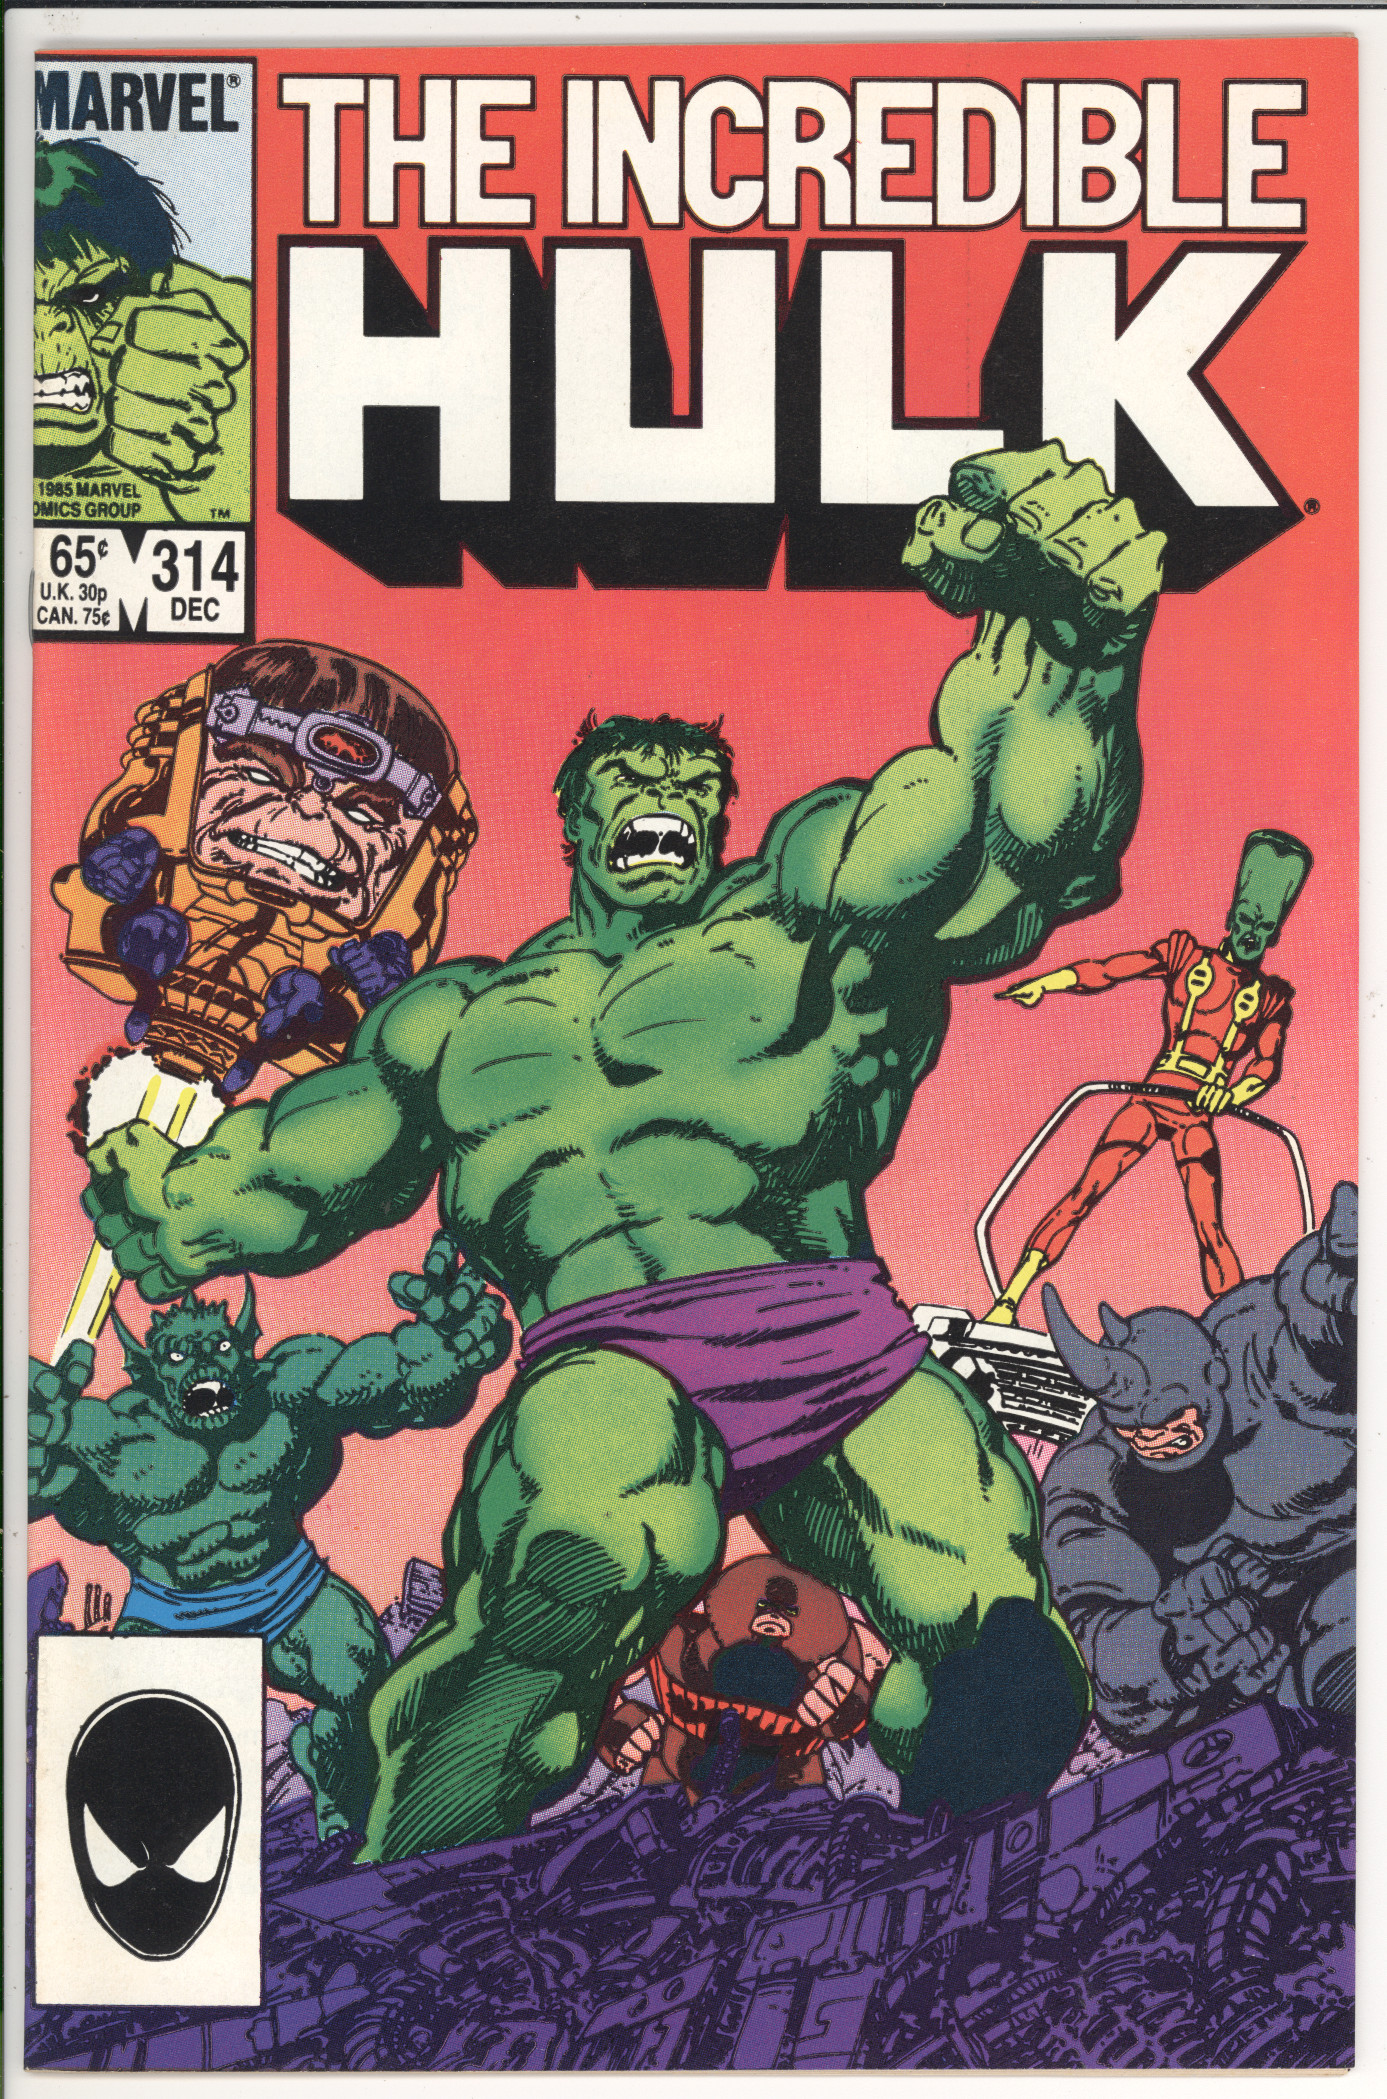 Incredible Hulk #314 front